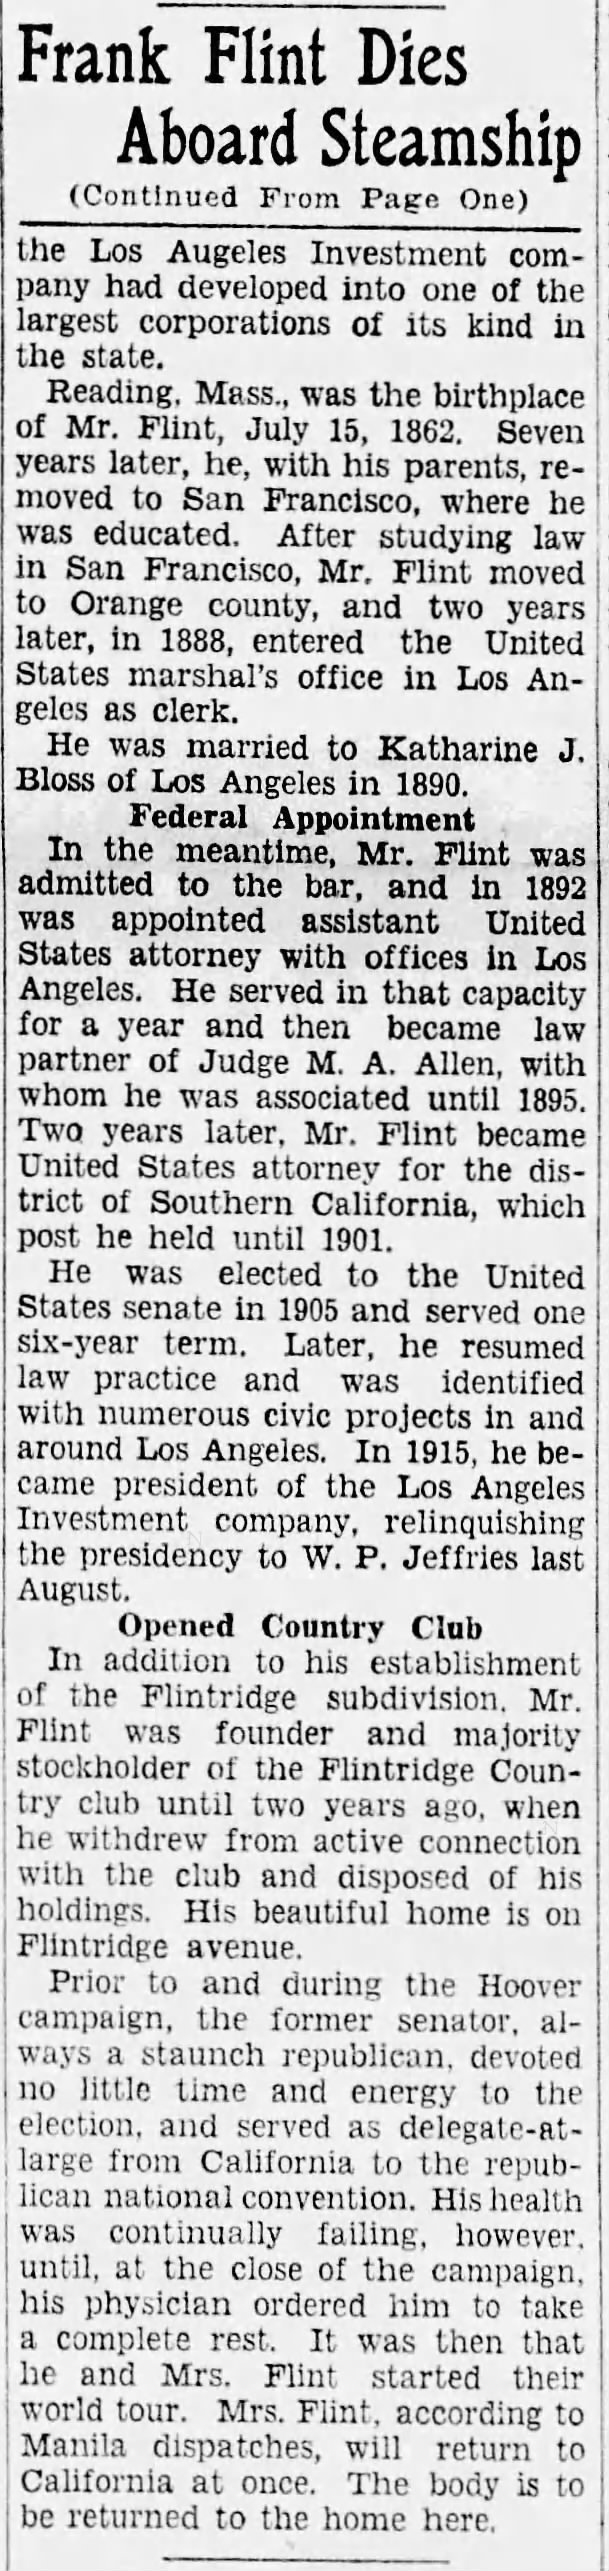 Frank Flint Dies Aboard Steamship; 12 Feb 1929; The Pasadena Post; 2